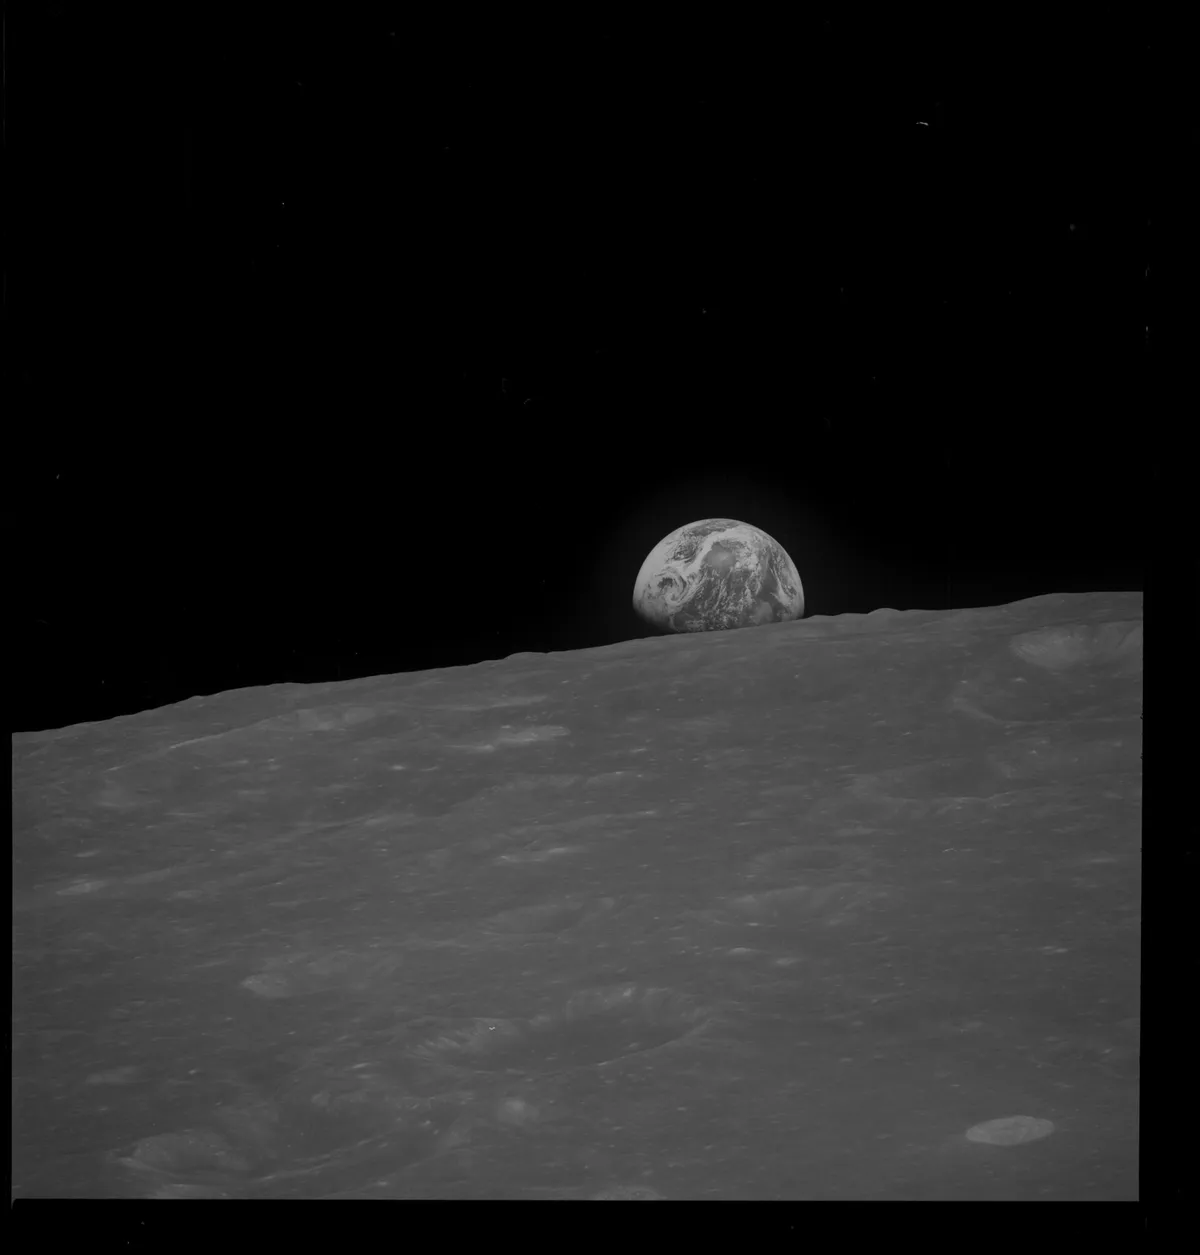 AS08-13-2329 - Apollo 8 Hasselblad image from film magazine 13/E - Lunar Orbit, Trans-Earth Coast